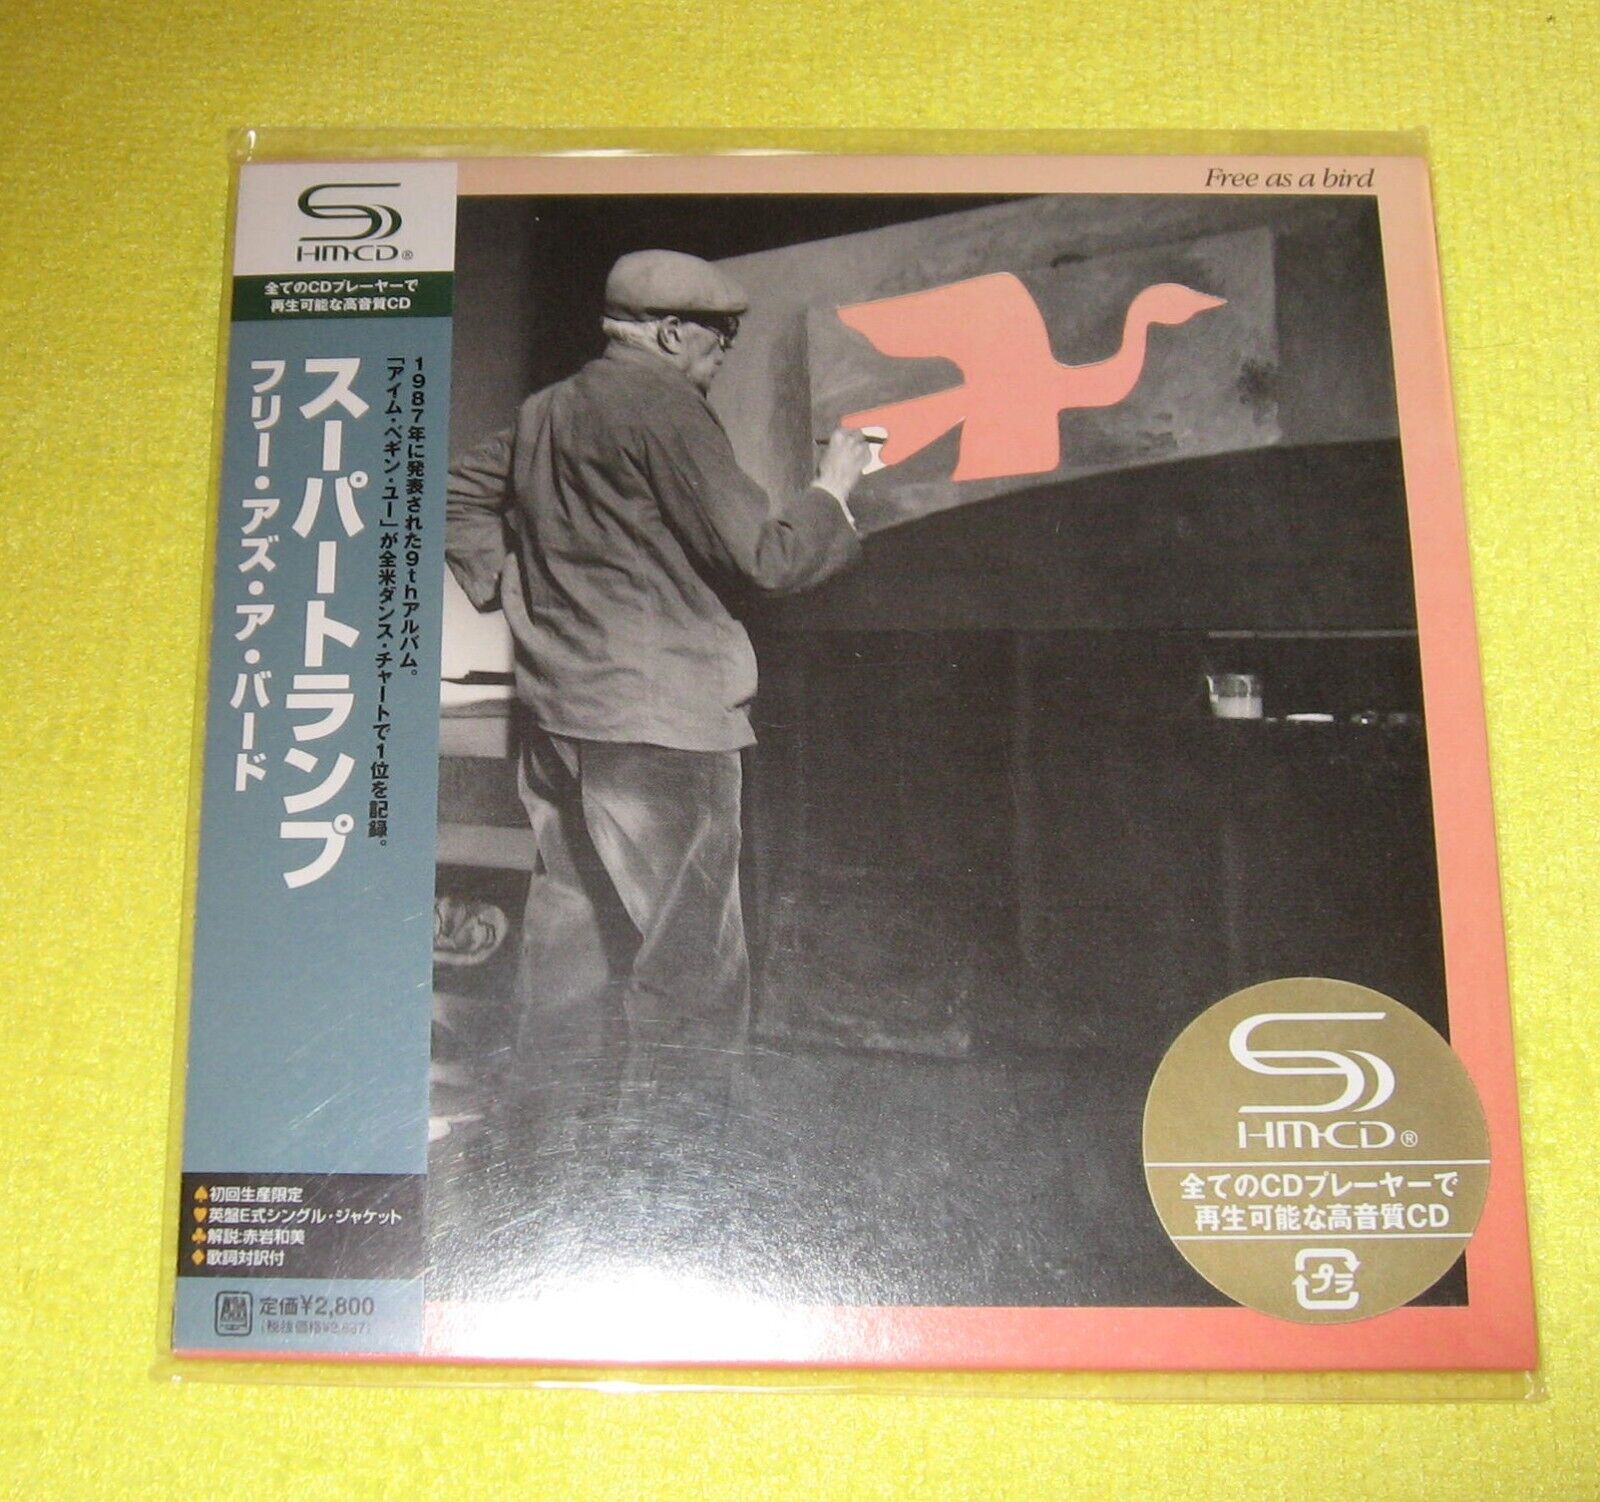 Supertramp - Free As A Bird * Japan Mini LP SHM-CD * UICY-77882 * Rick Davies